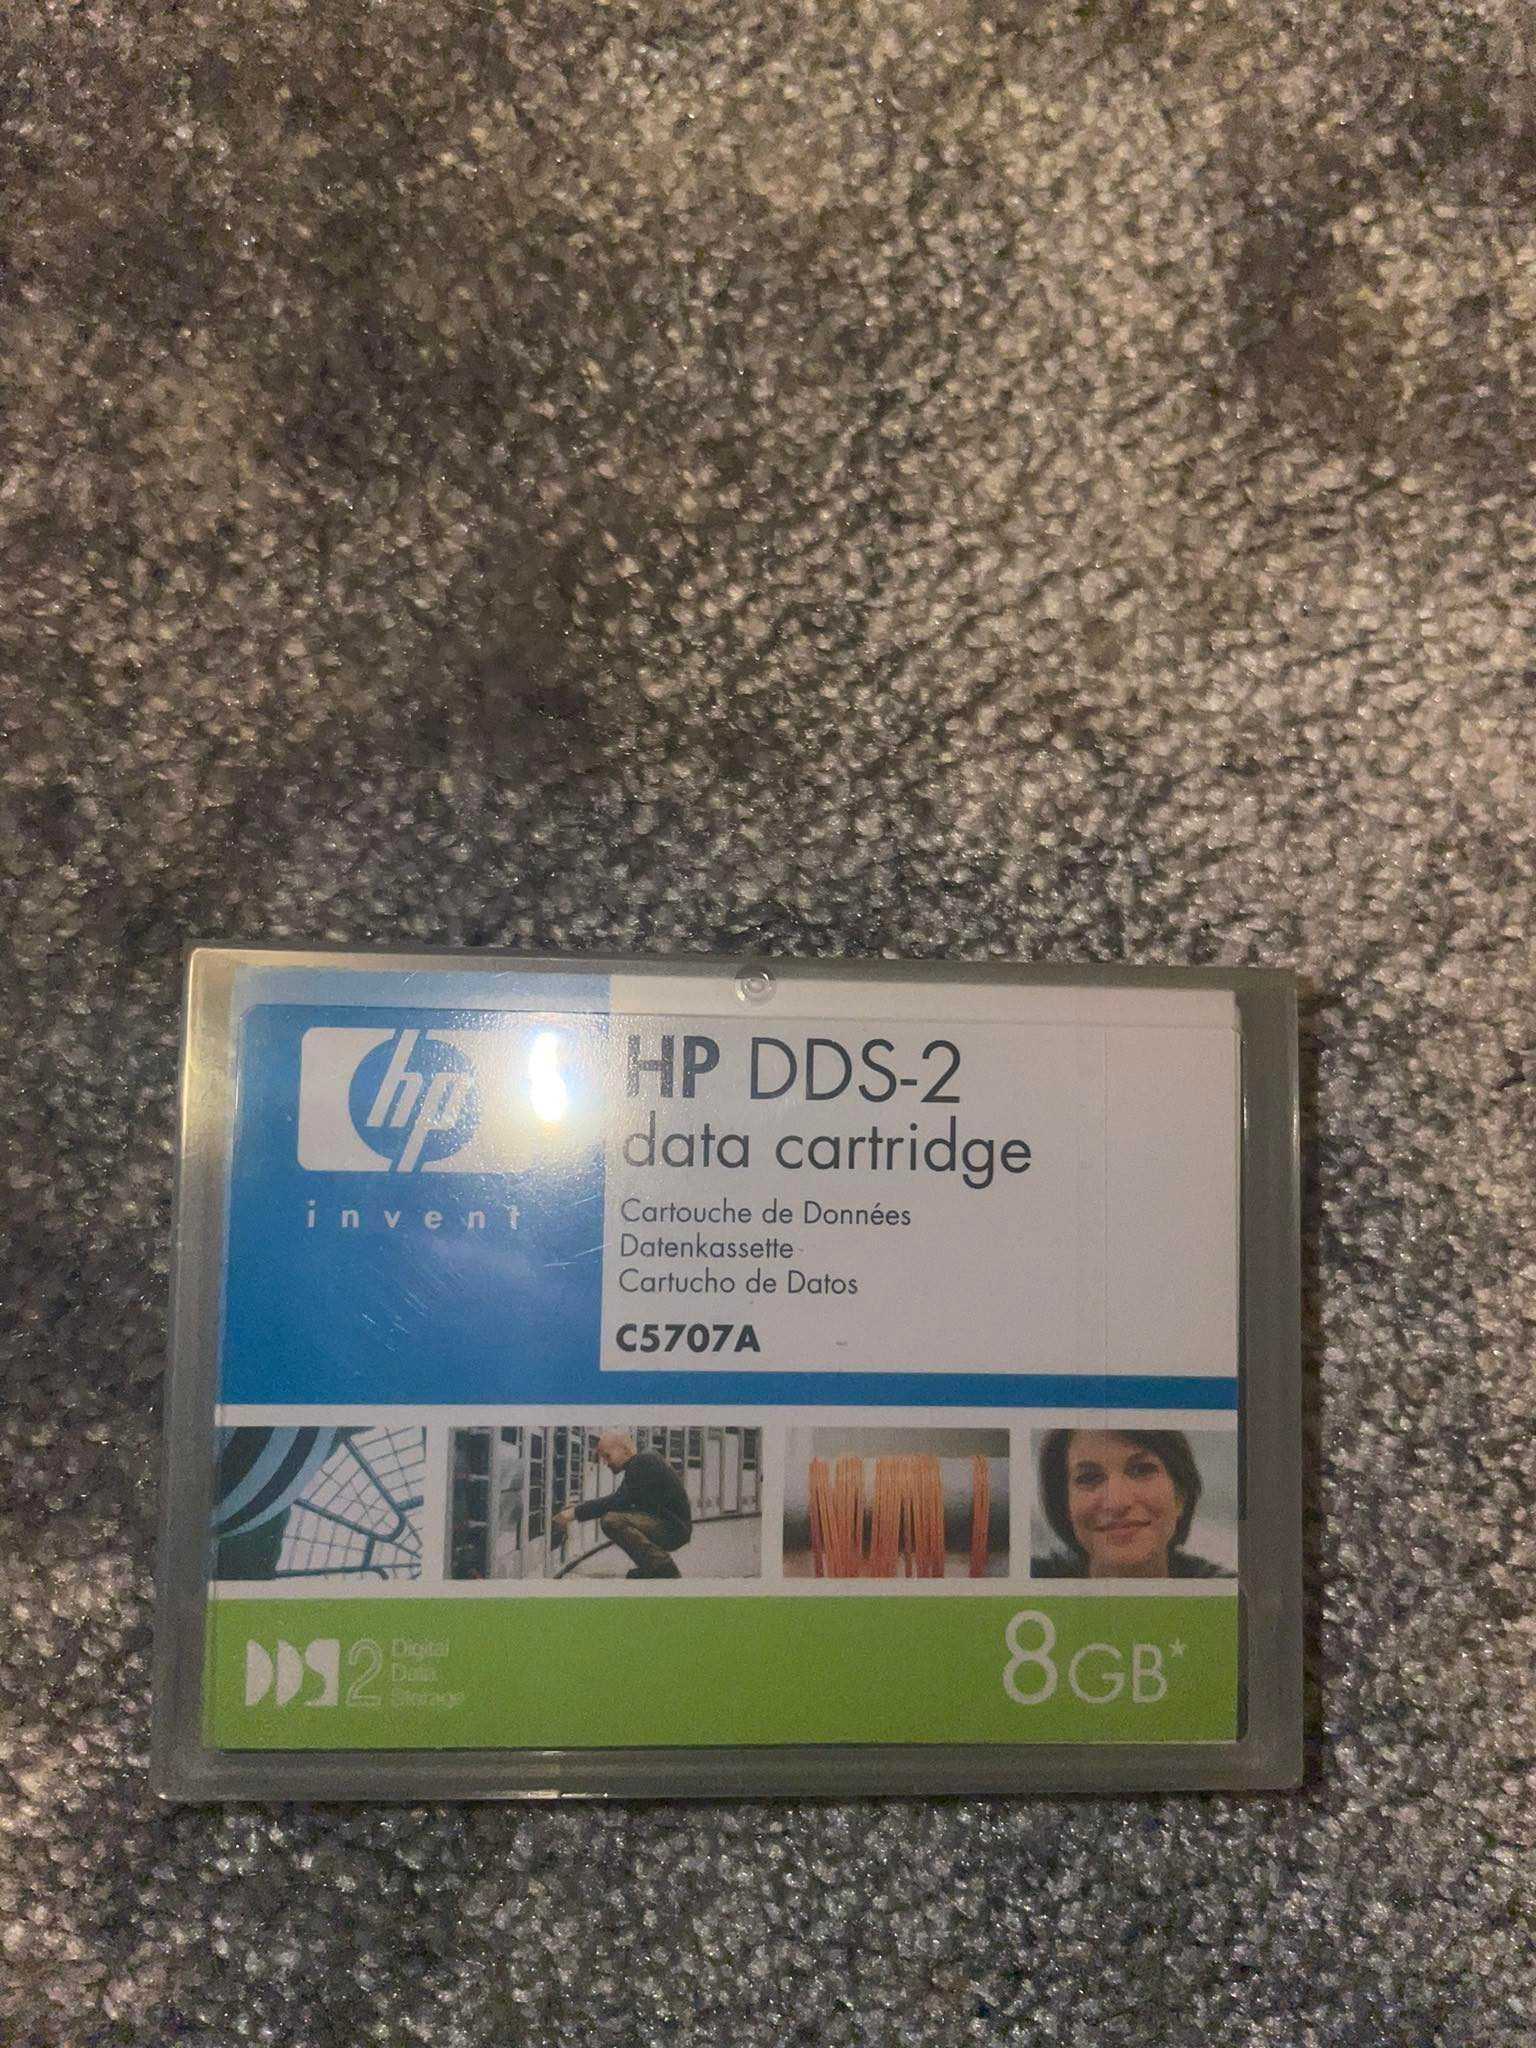 HP DDS-2 data cartridge 8GB